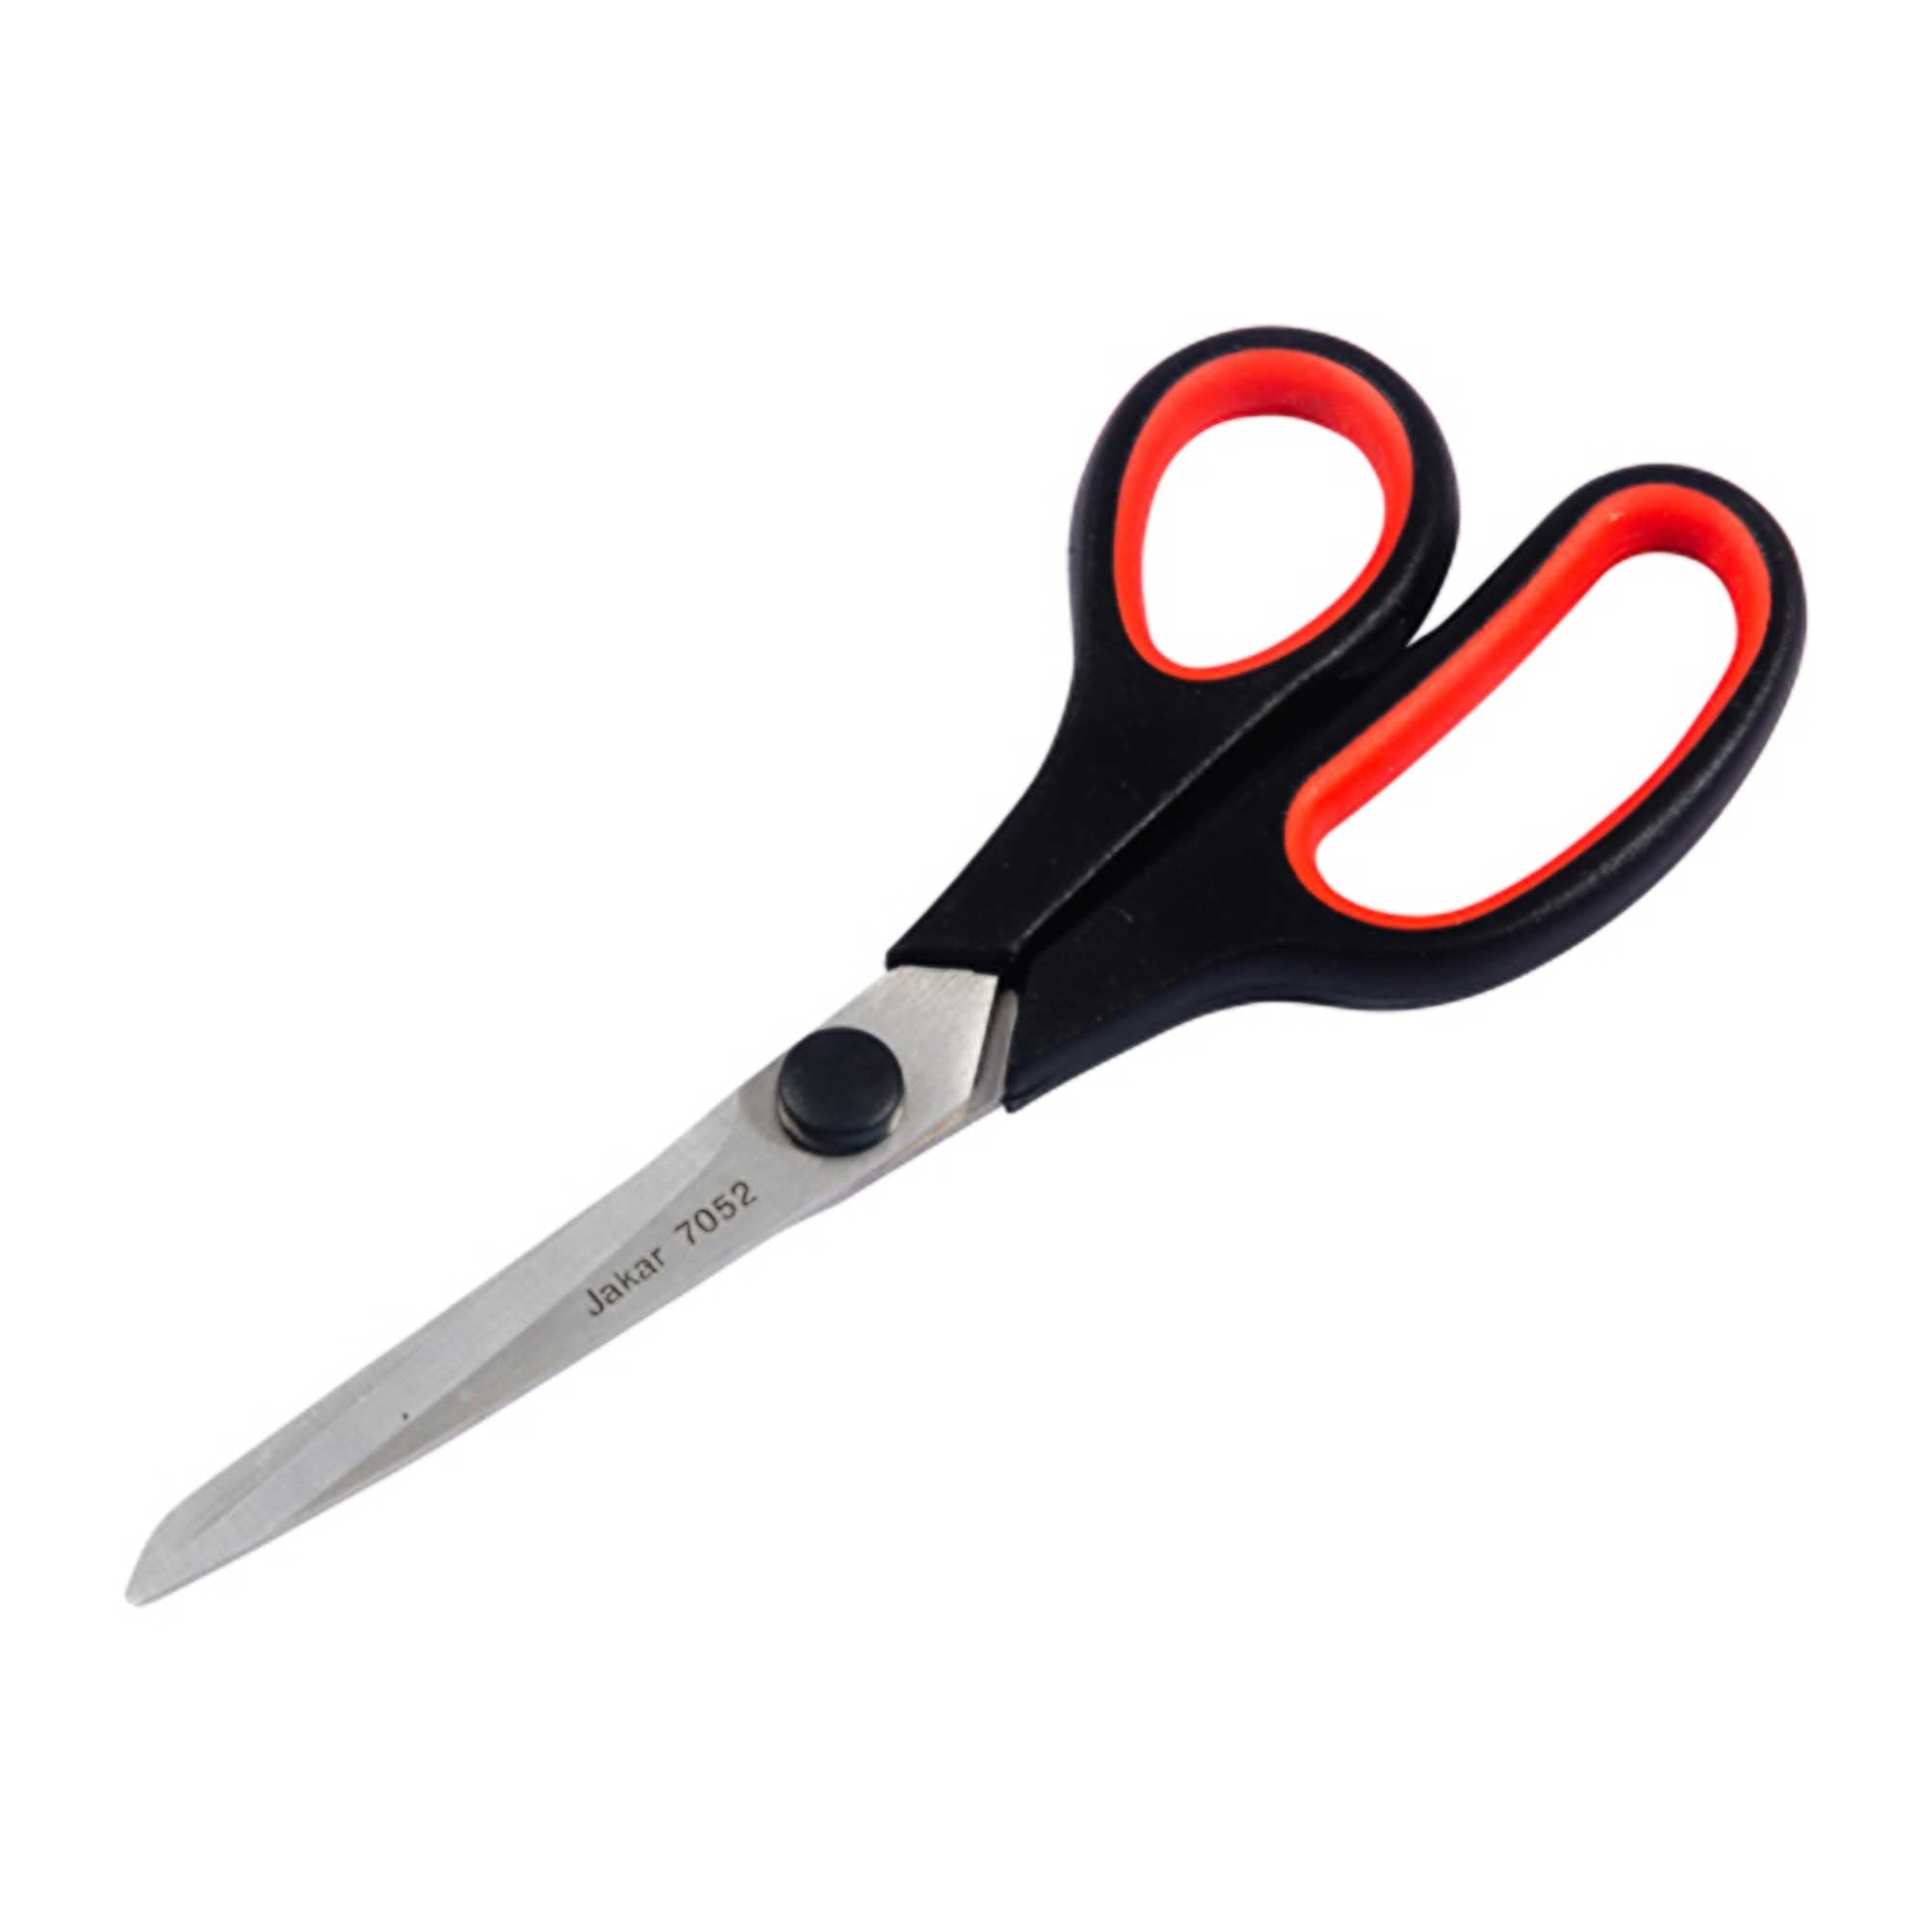 Jakar Soft Grip Stainless Steel Scissors - 19cm/7.5"